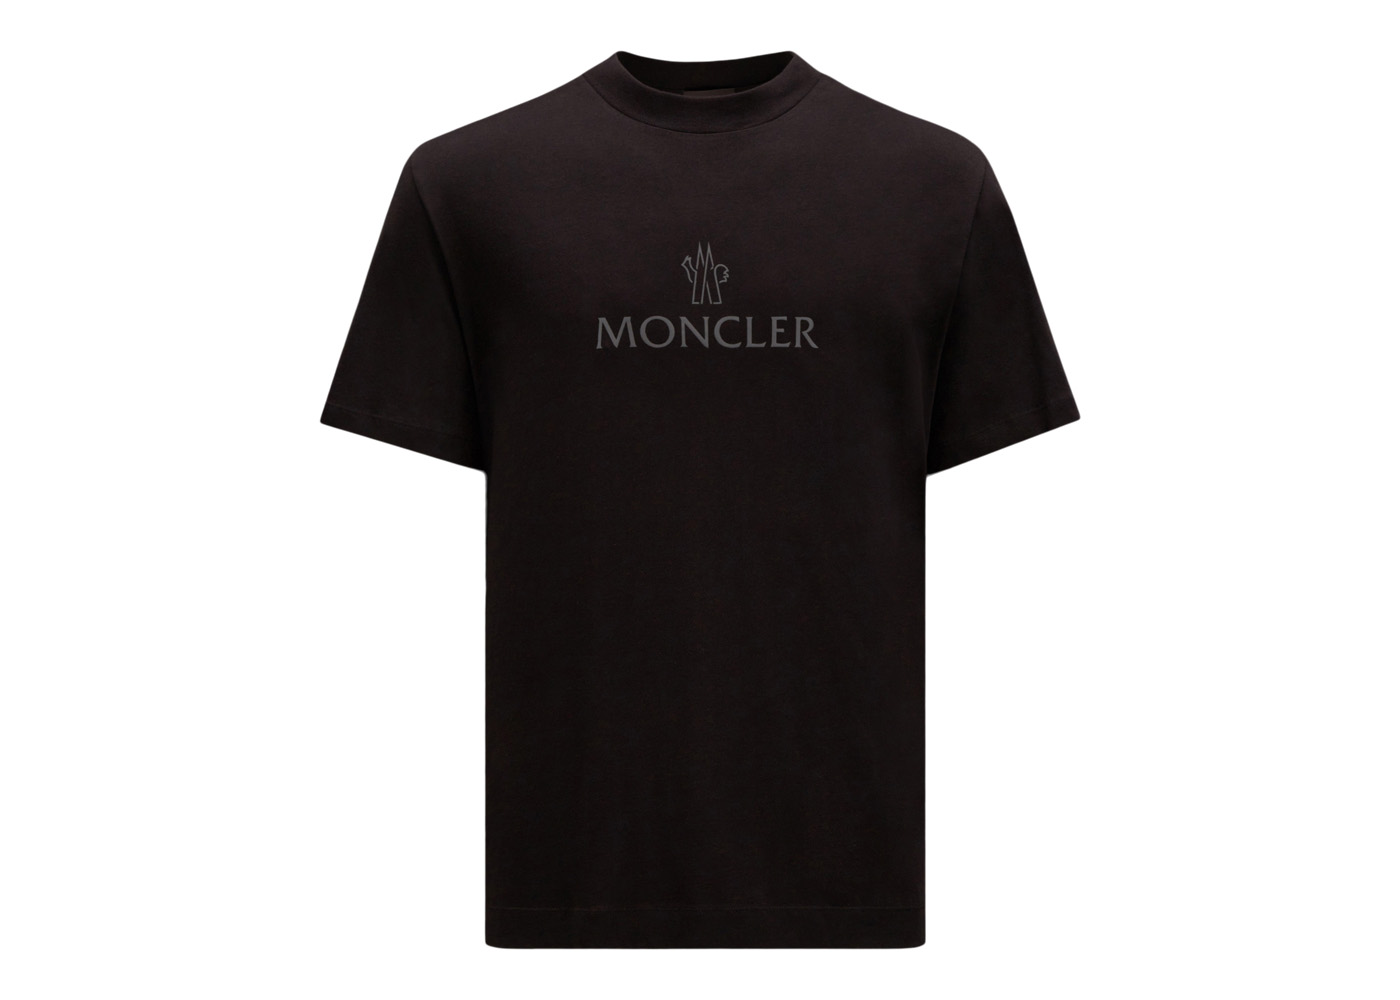 Moncler Reflective Logo Print T-Shirt Black/Dark Grey Men's - US